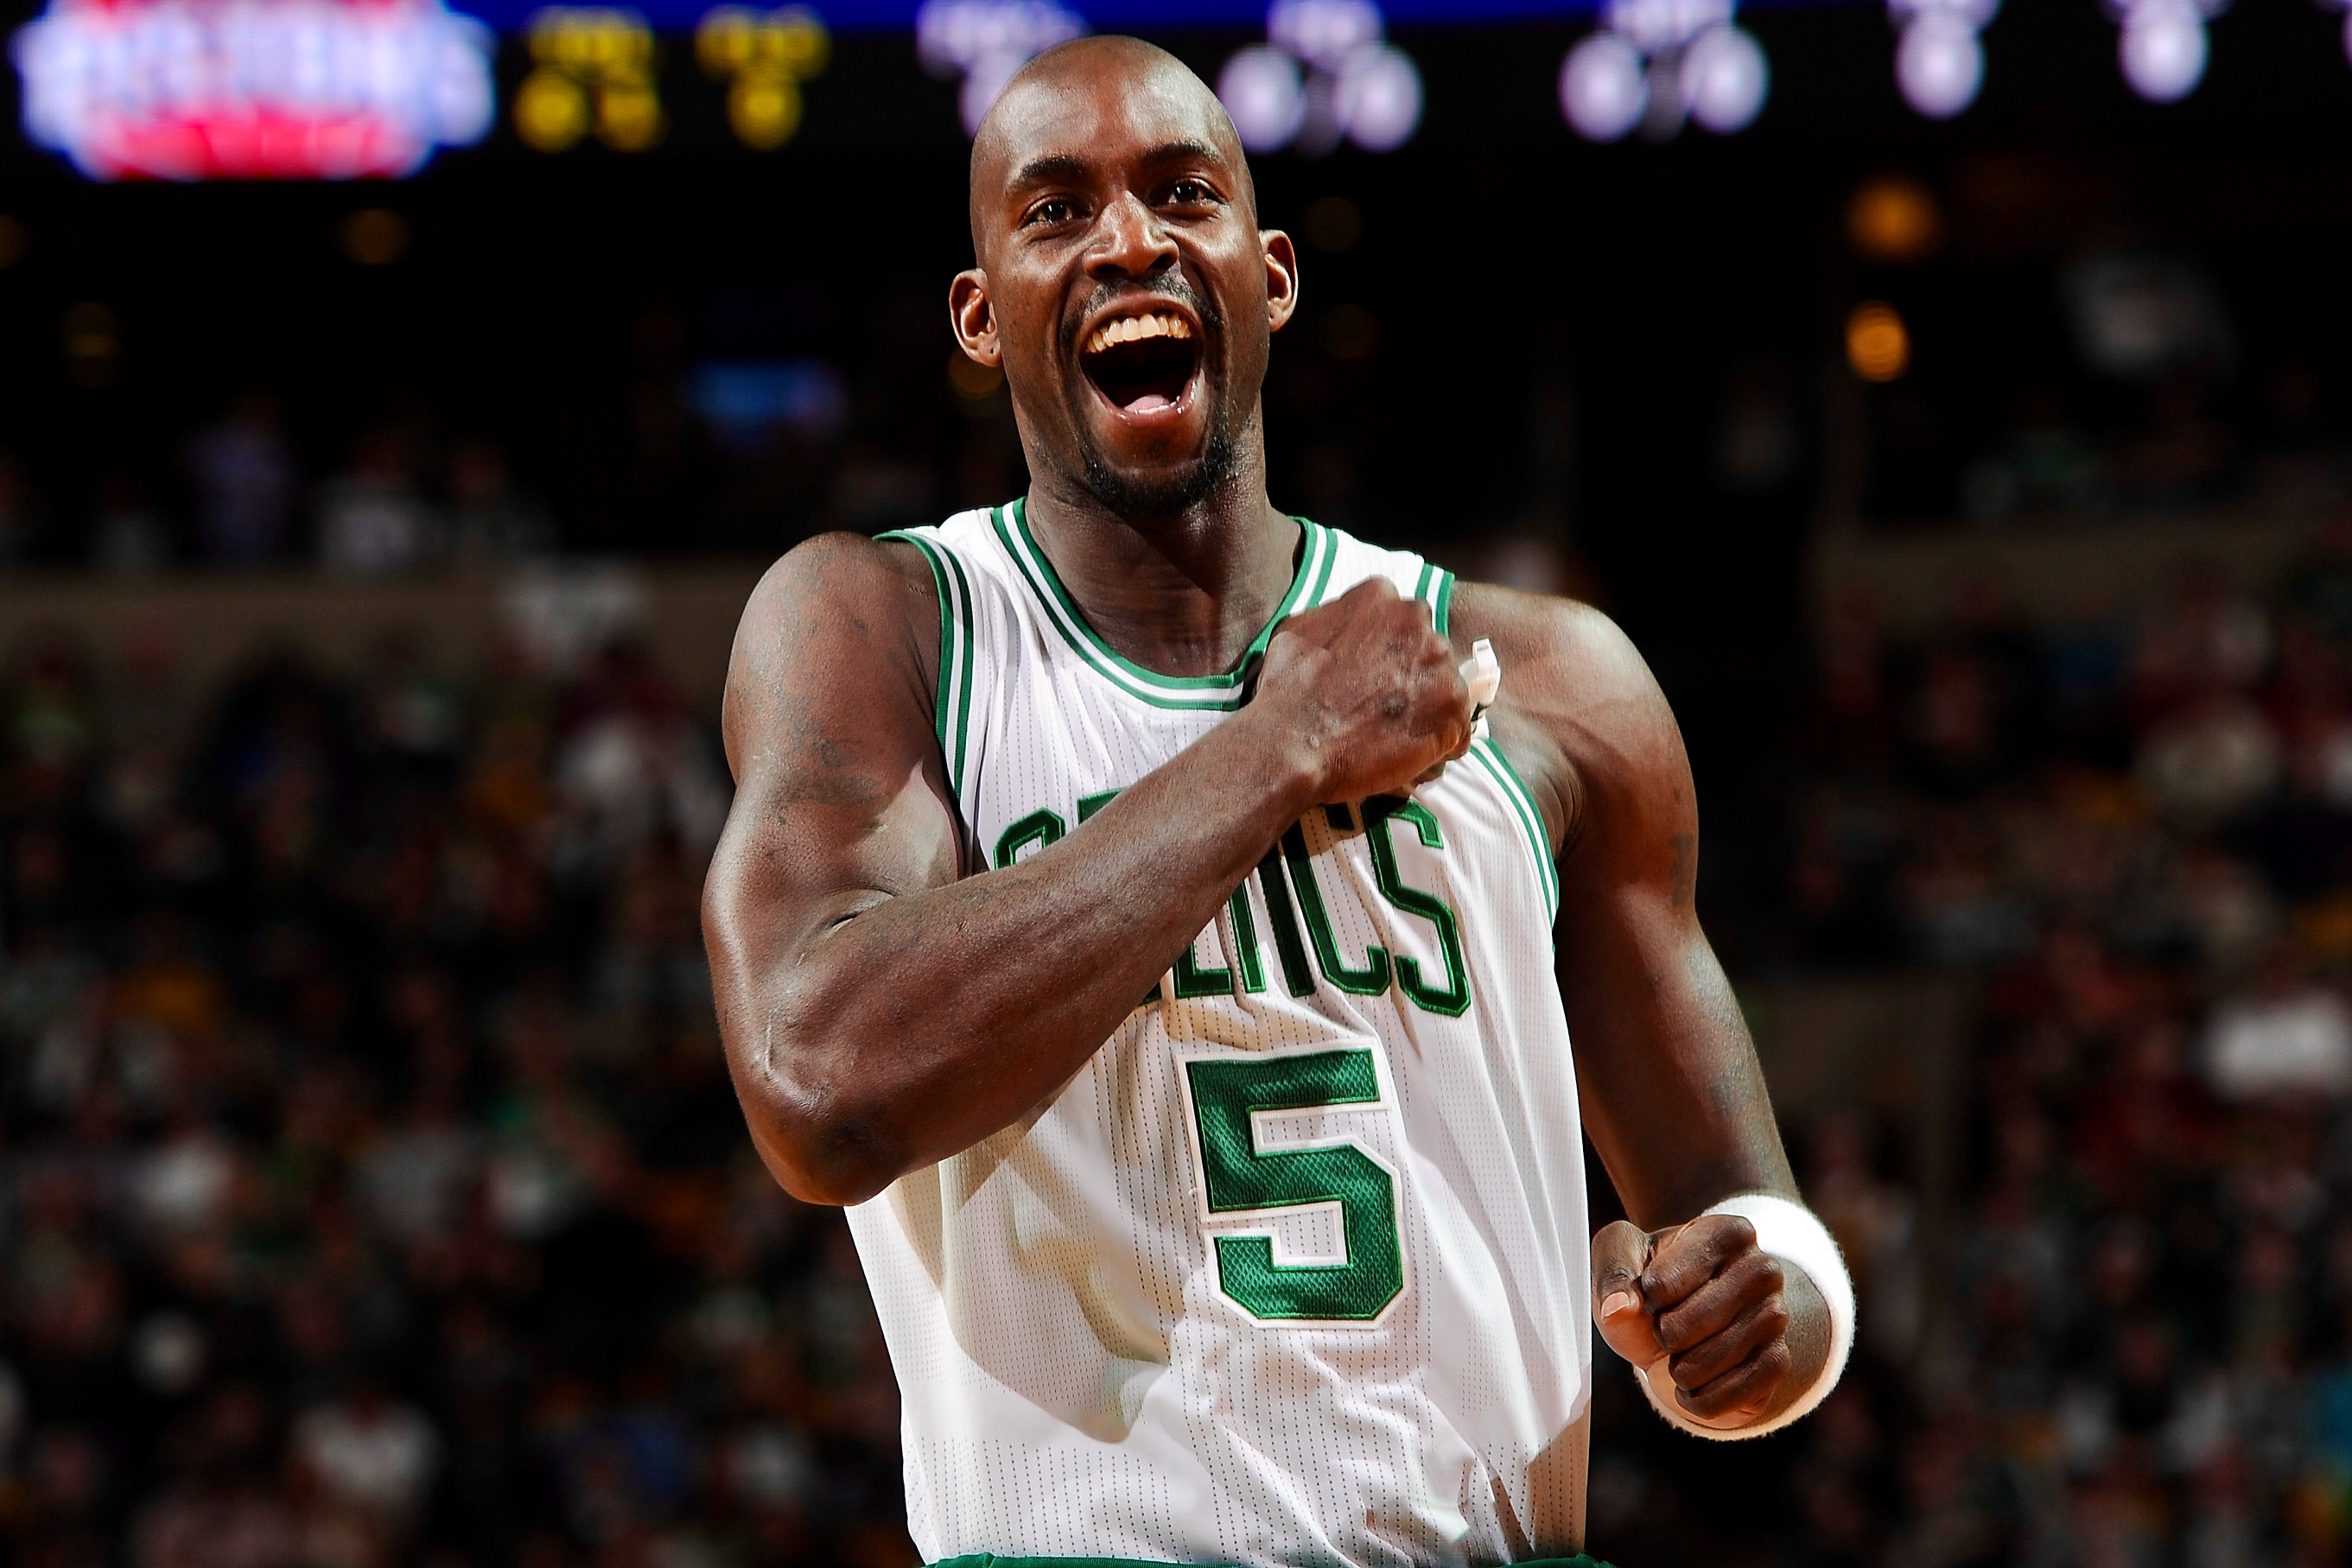 Kevin Garnett gets emotional ahead of Celtics jersey retirement